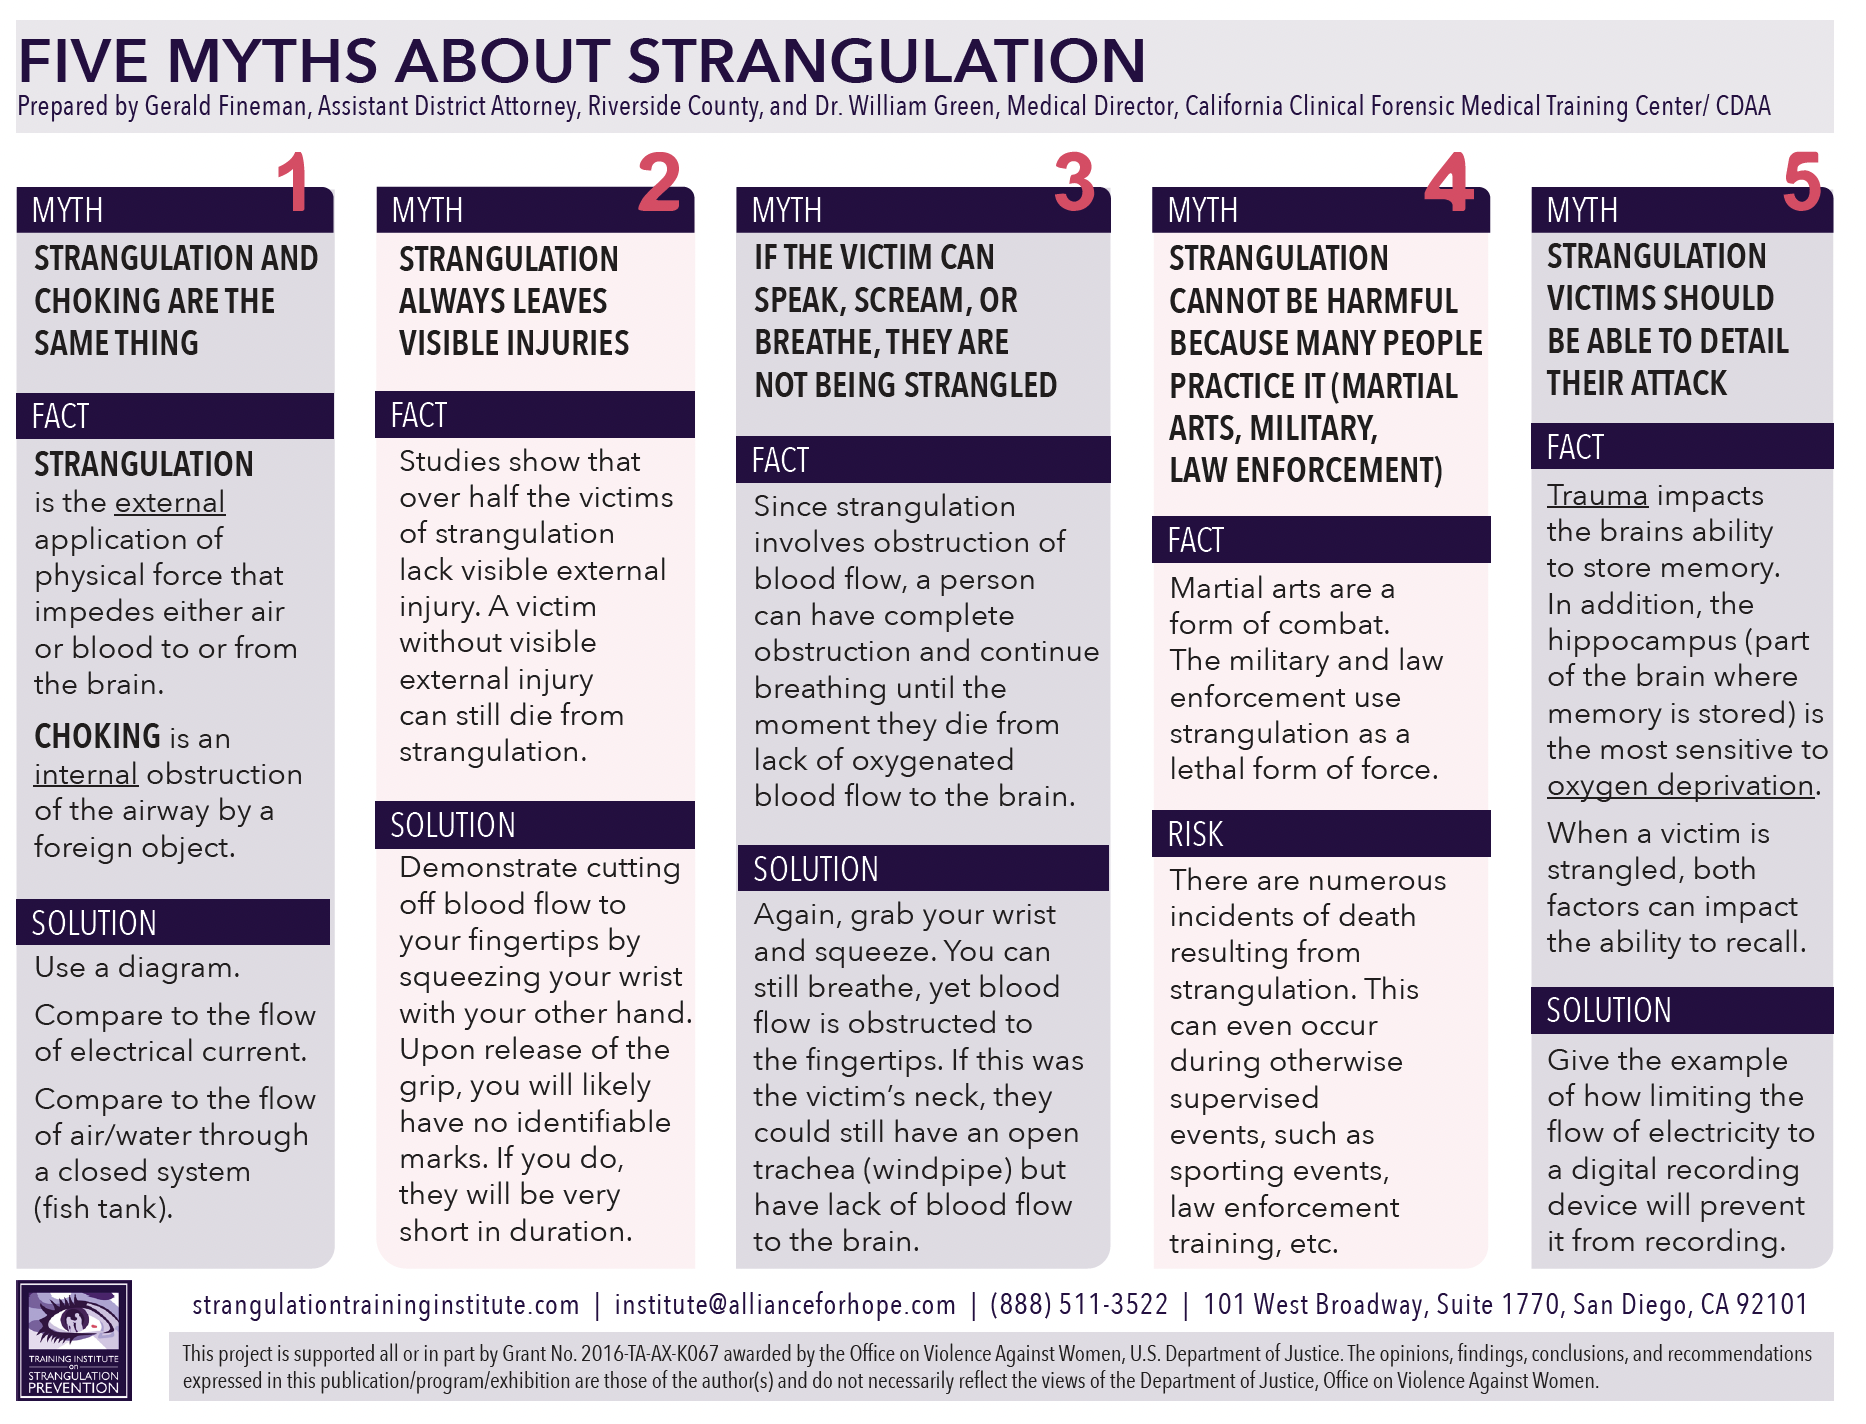 Detailed description of five myths about strangulation